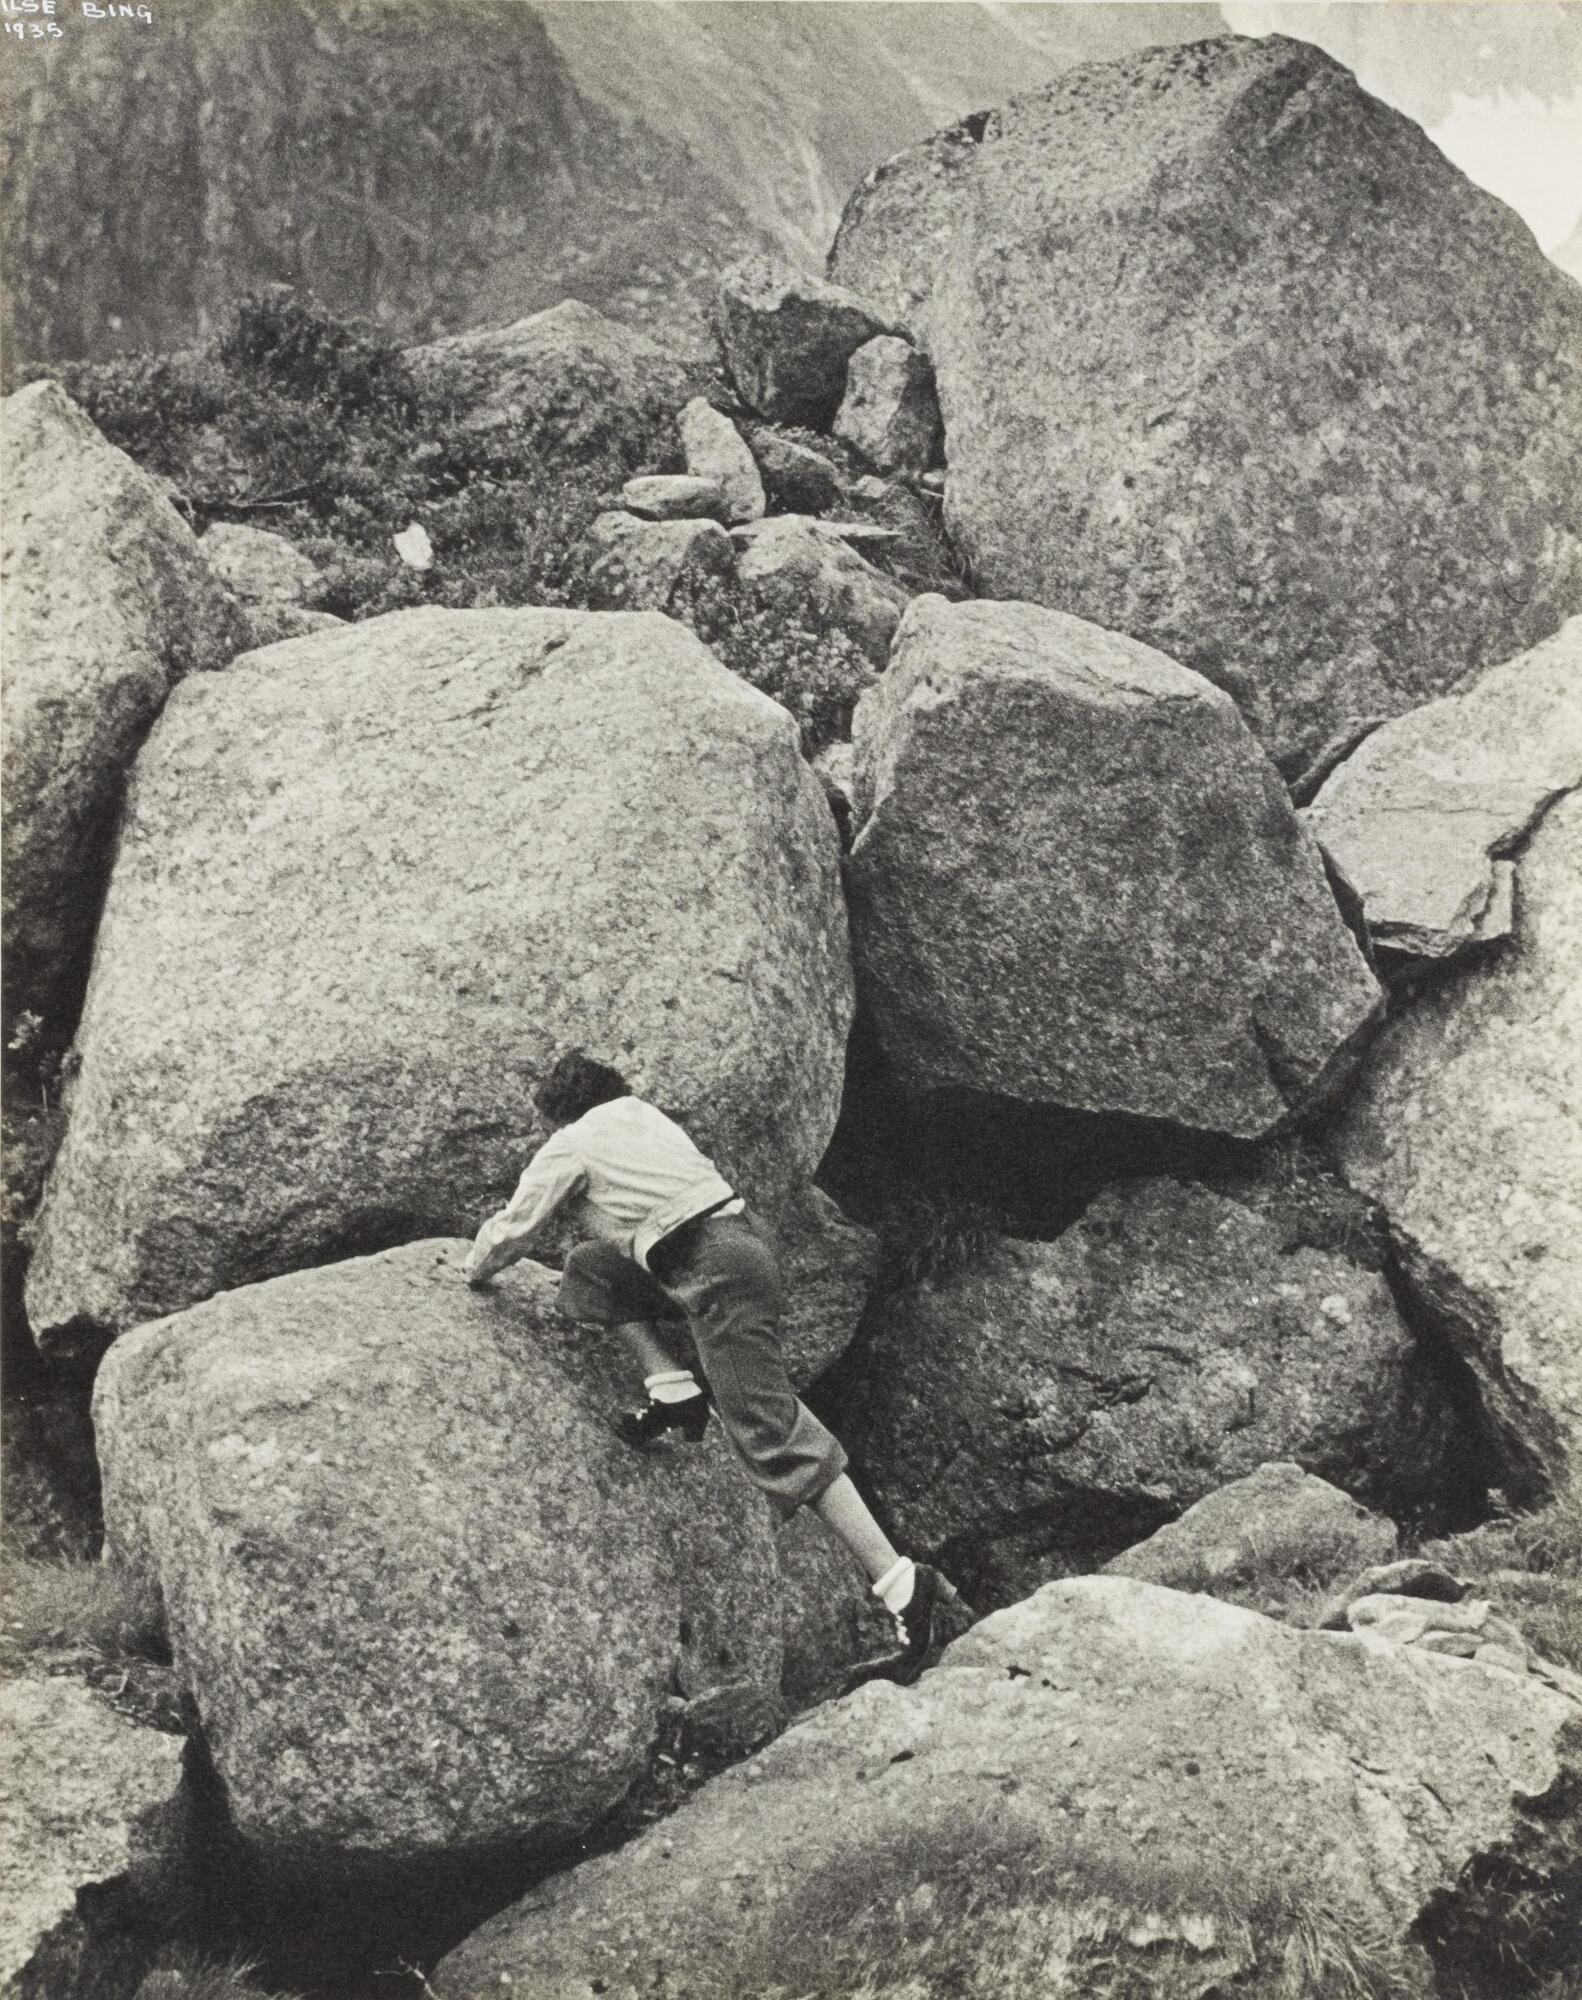 View of a woman rock-climbing.